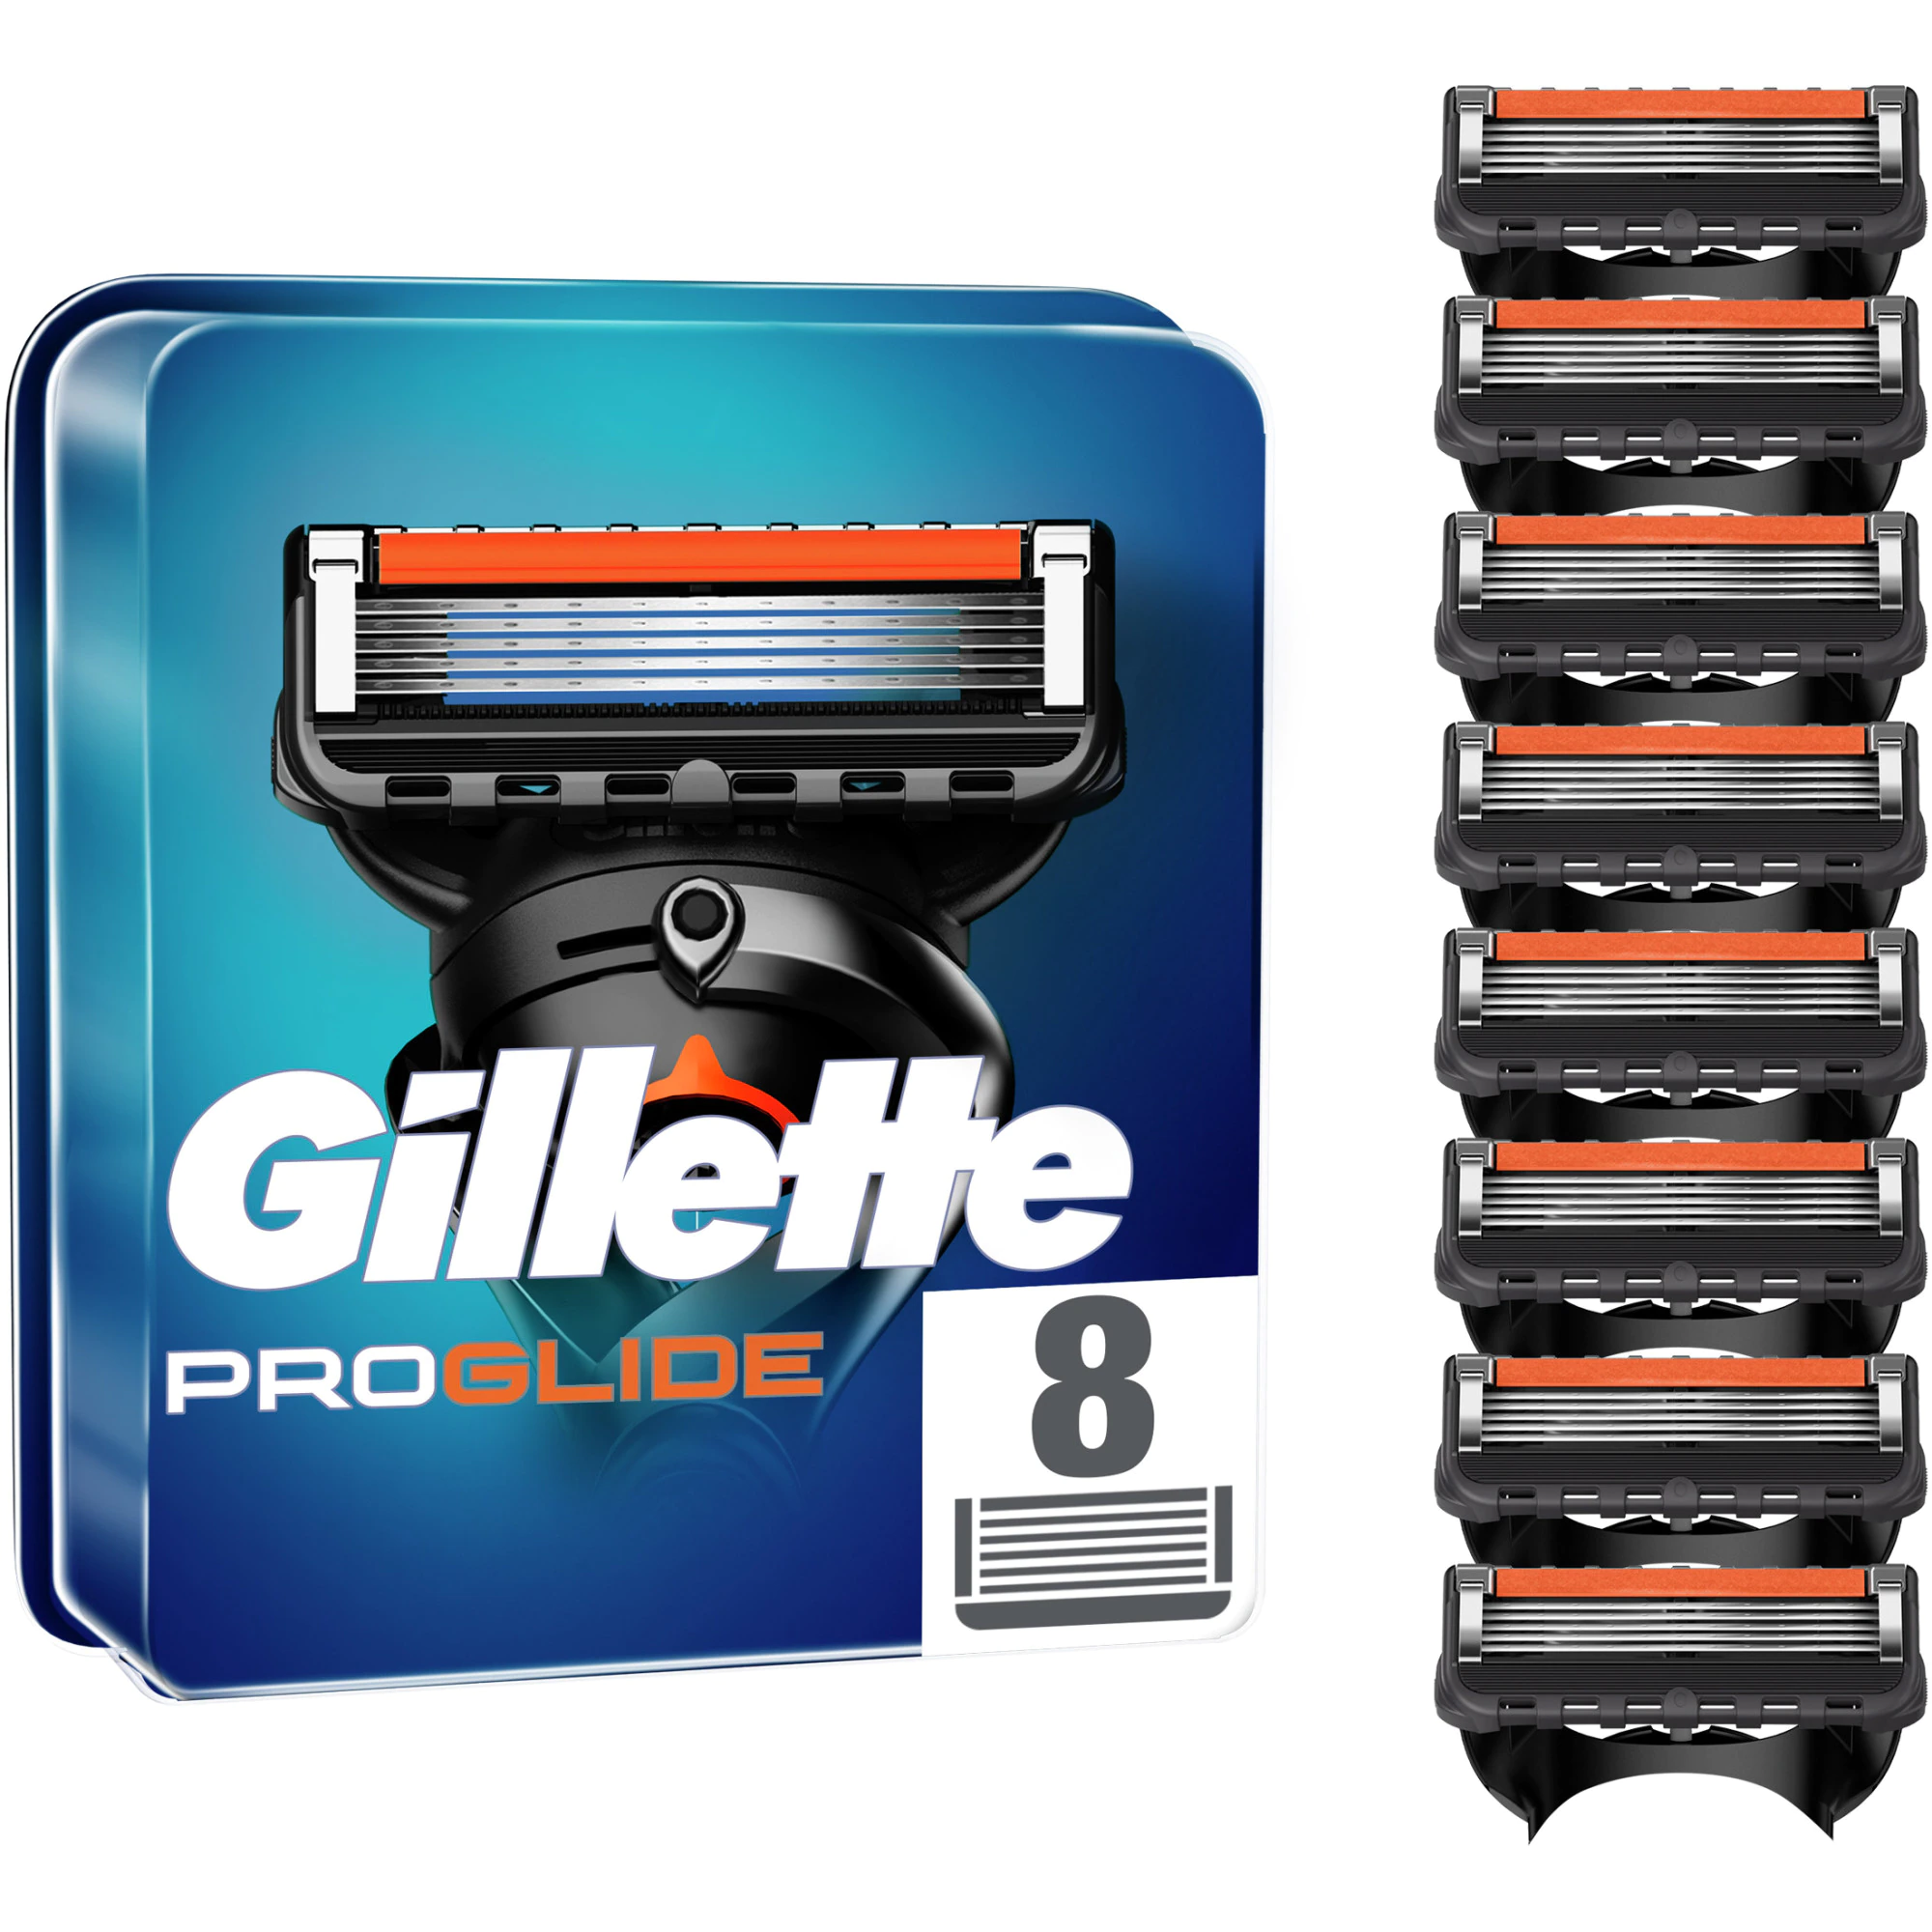 Produse ras - Gillette Rezerva aparat fusion proglide man set 8, Procter & Gamble, sinapis.ro